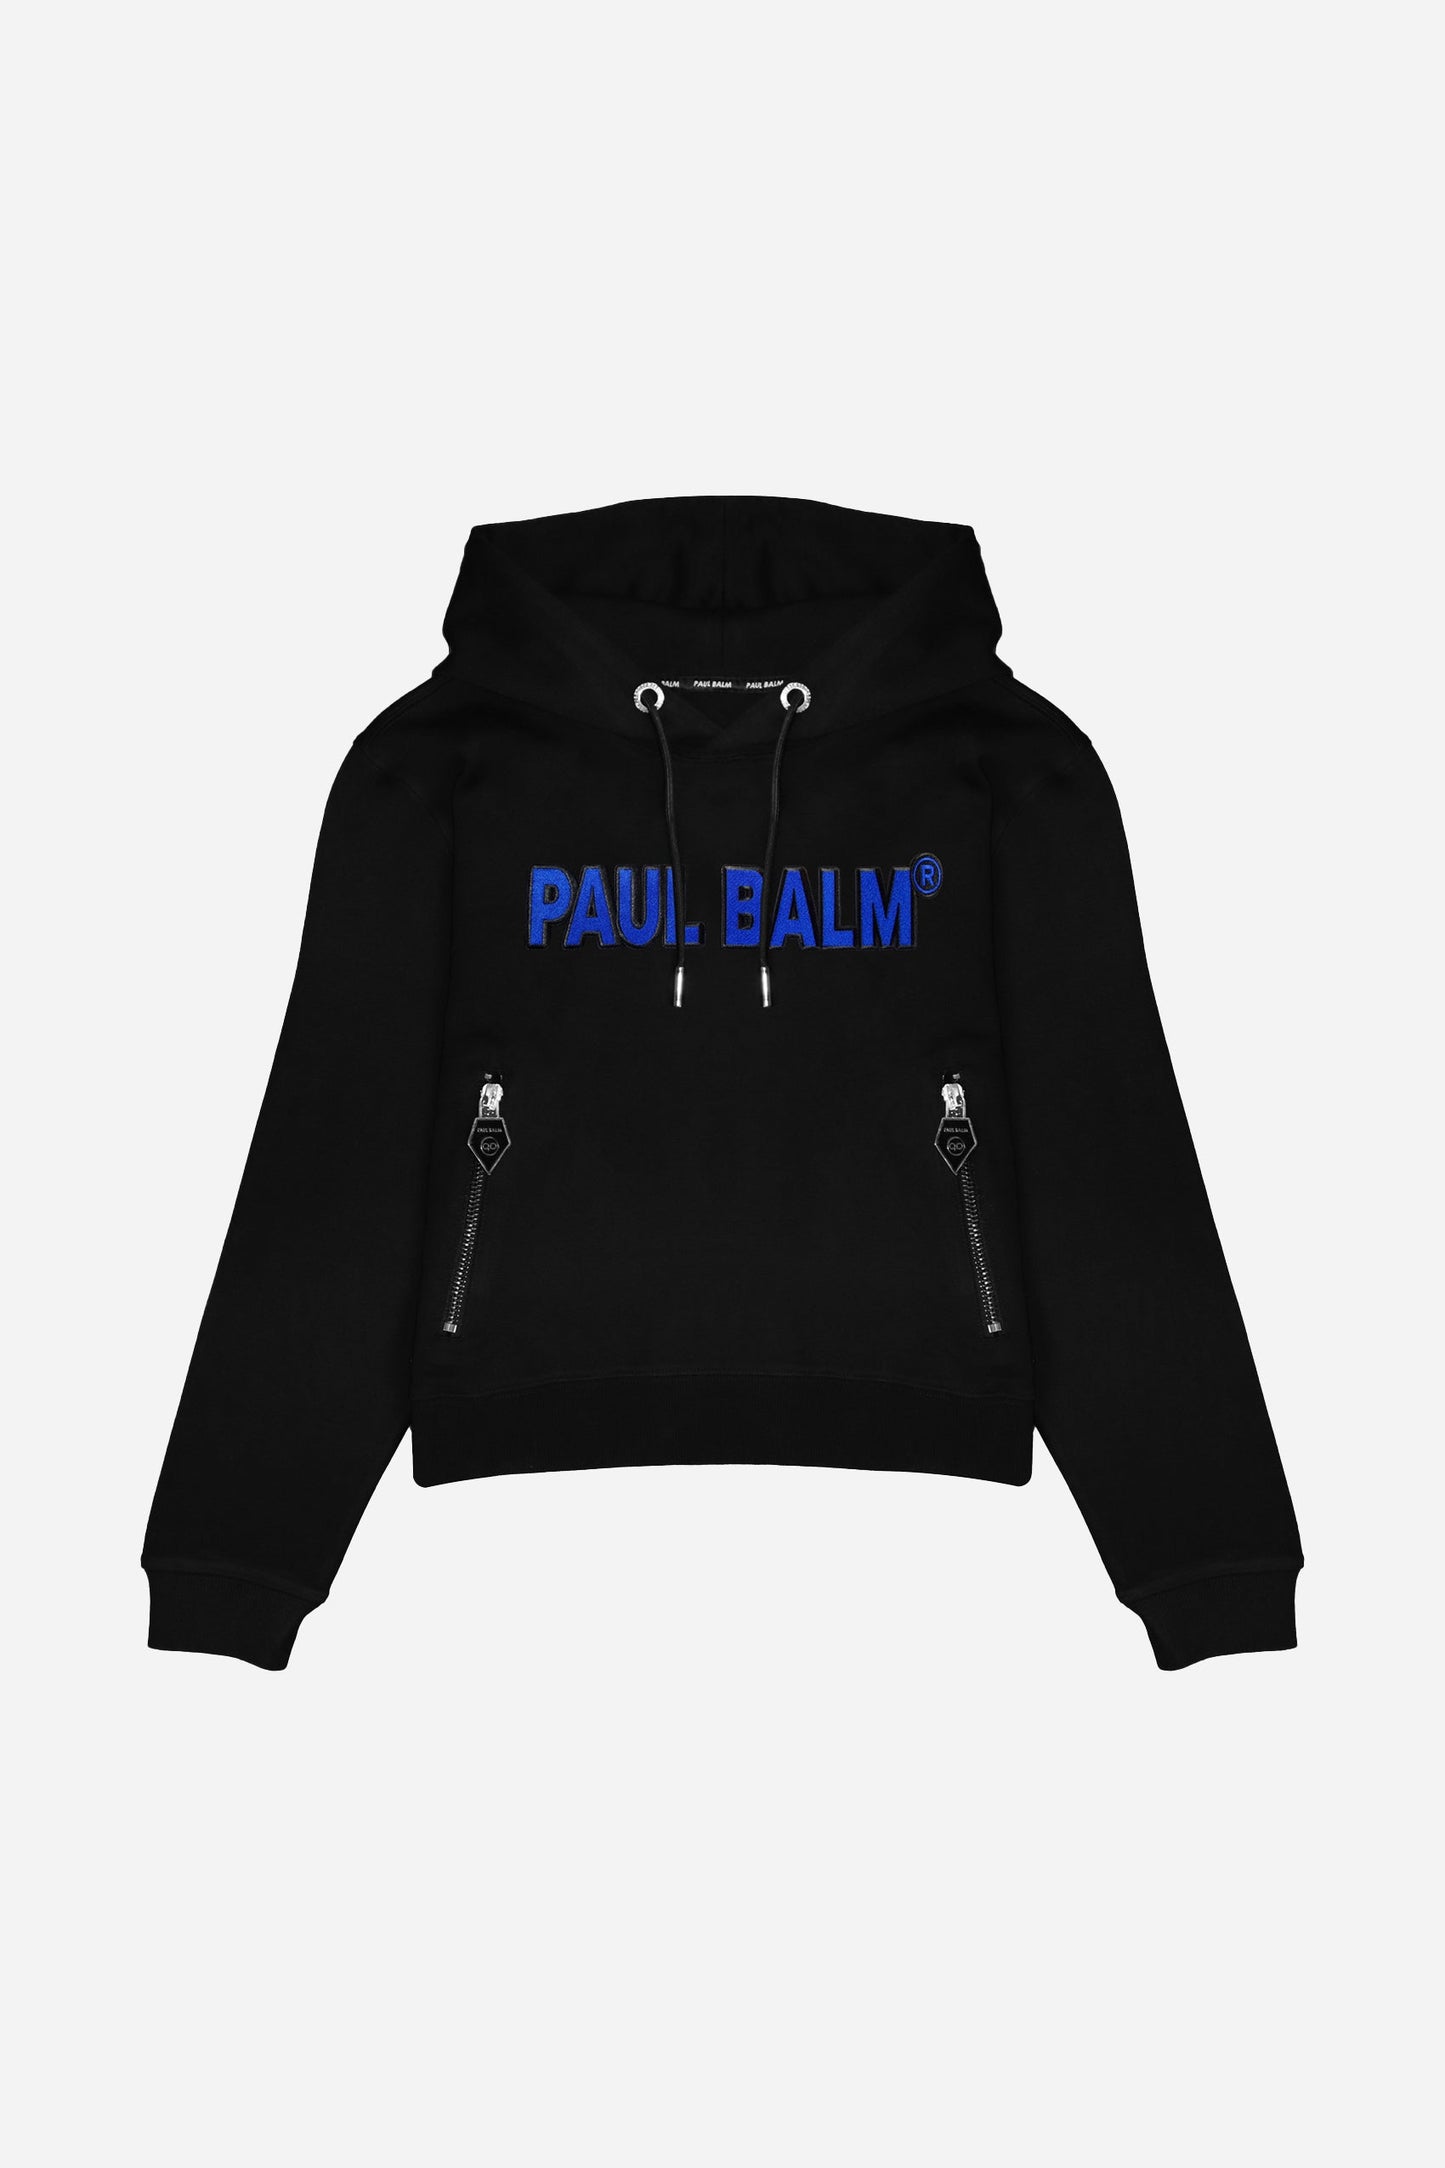 PAUL BALM Embroidery blue Hoodie